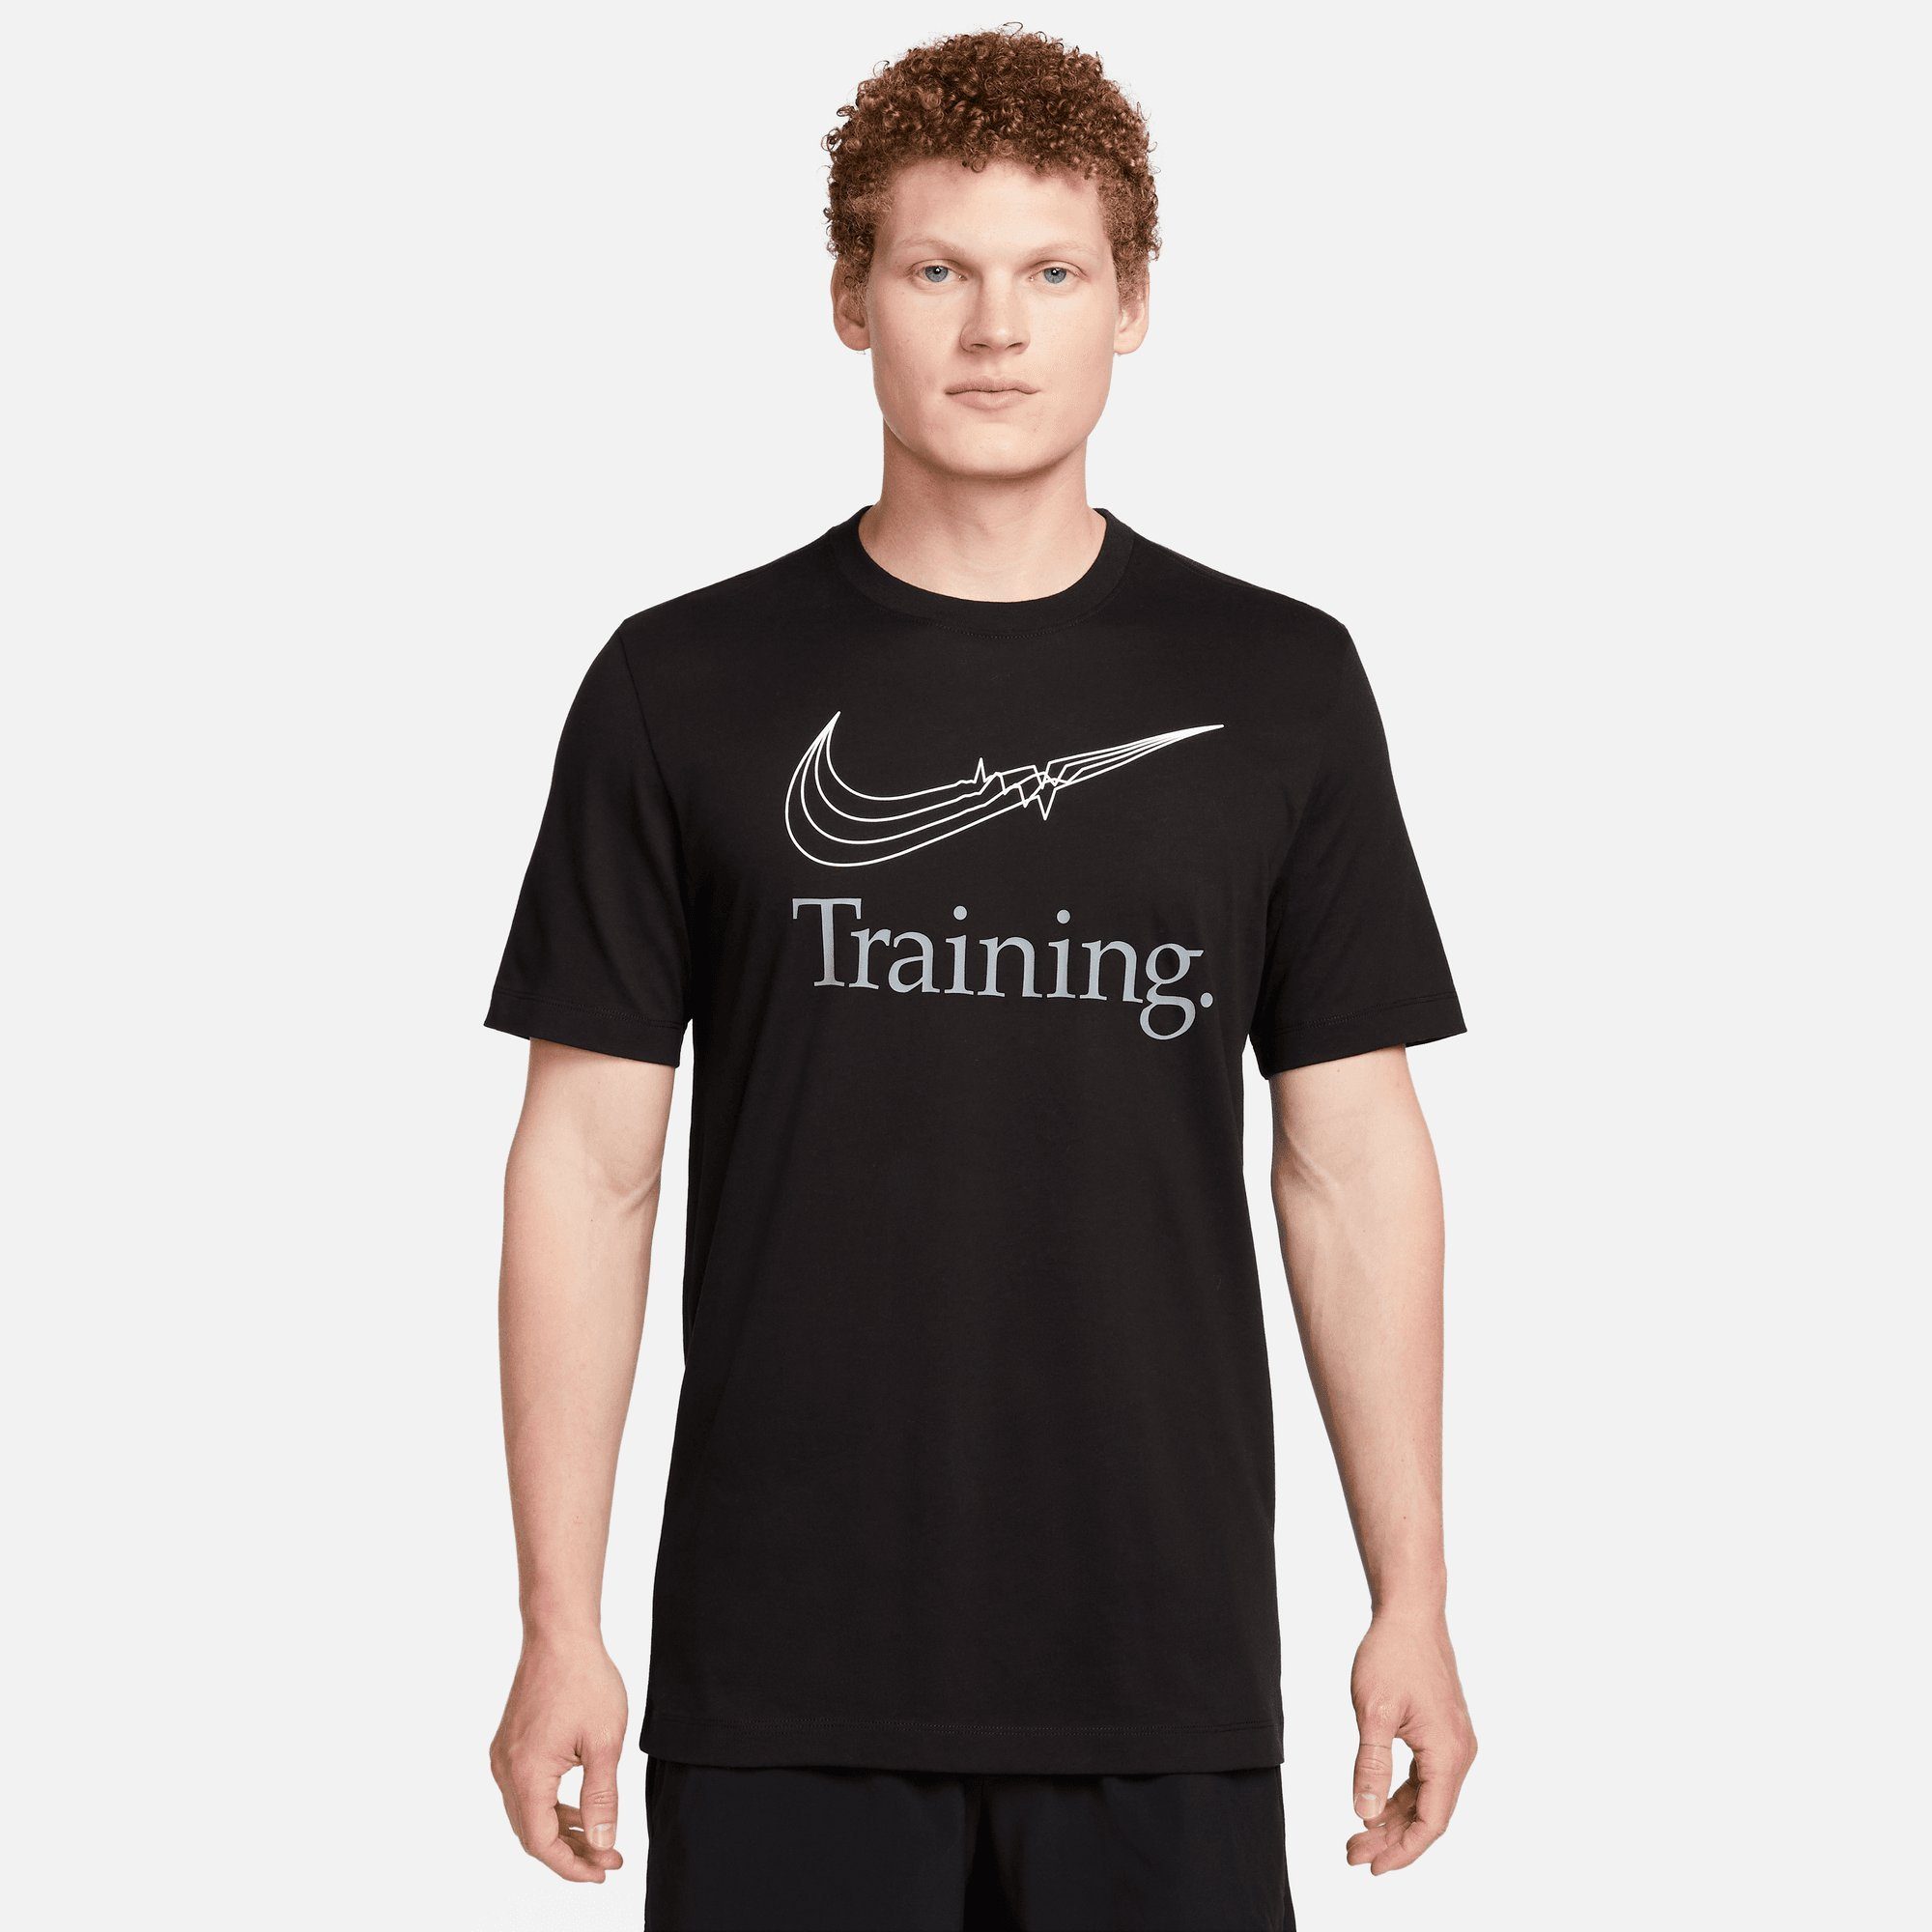 MEN'S Nike TRAINING DRI-FIT Trainingsshirt T-SHIRT